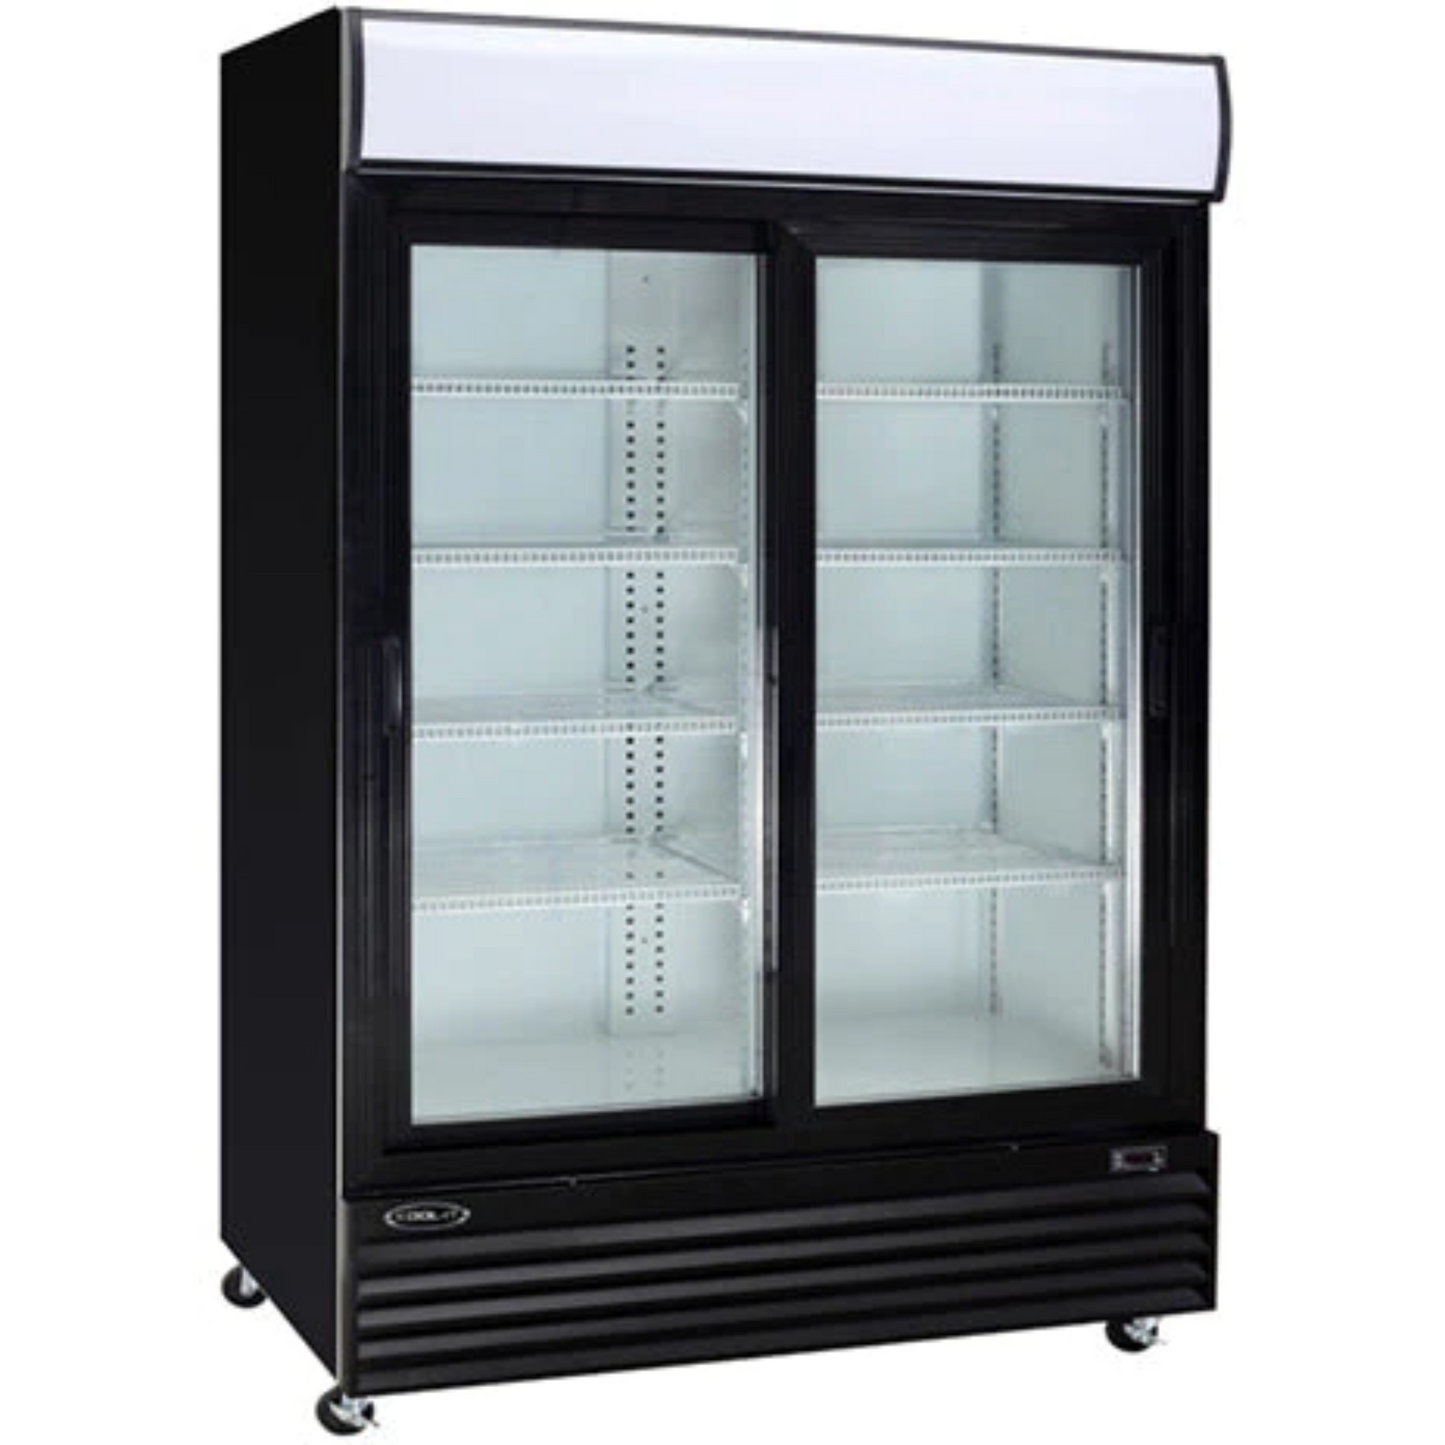 Kool-It KGM-42 52" Double Swing Glass Doors Merchandiser Refrigerator